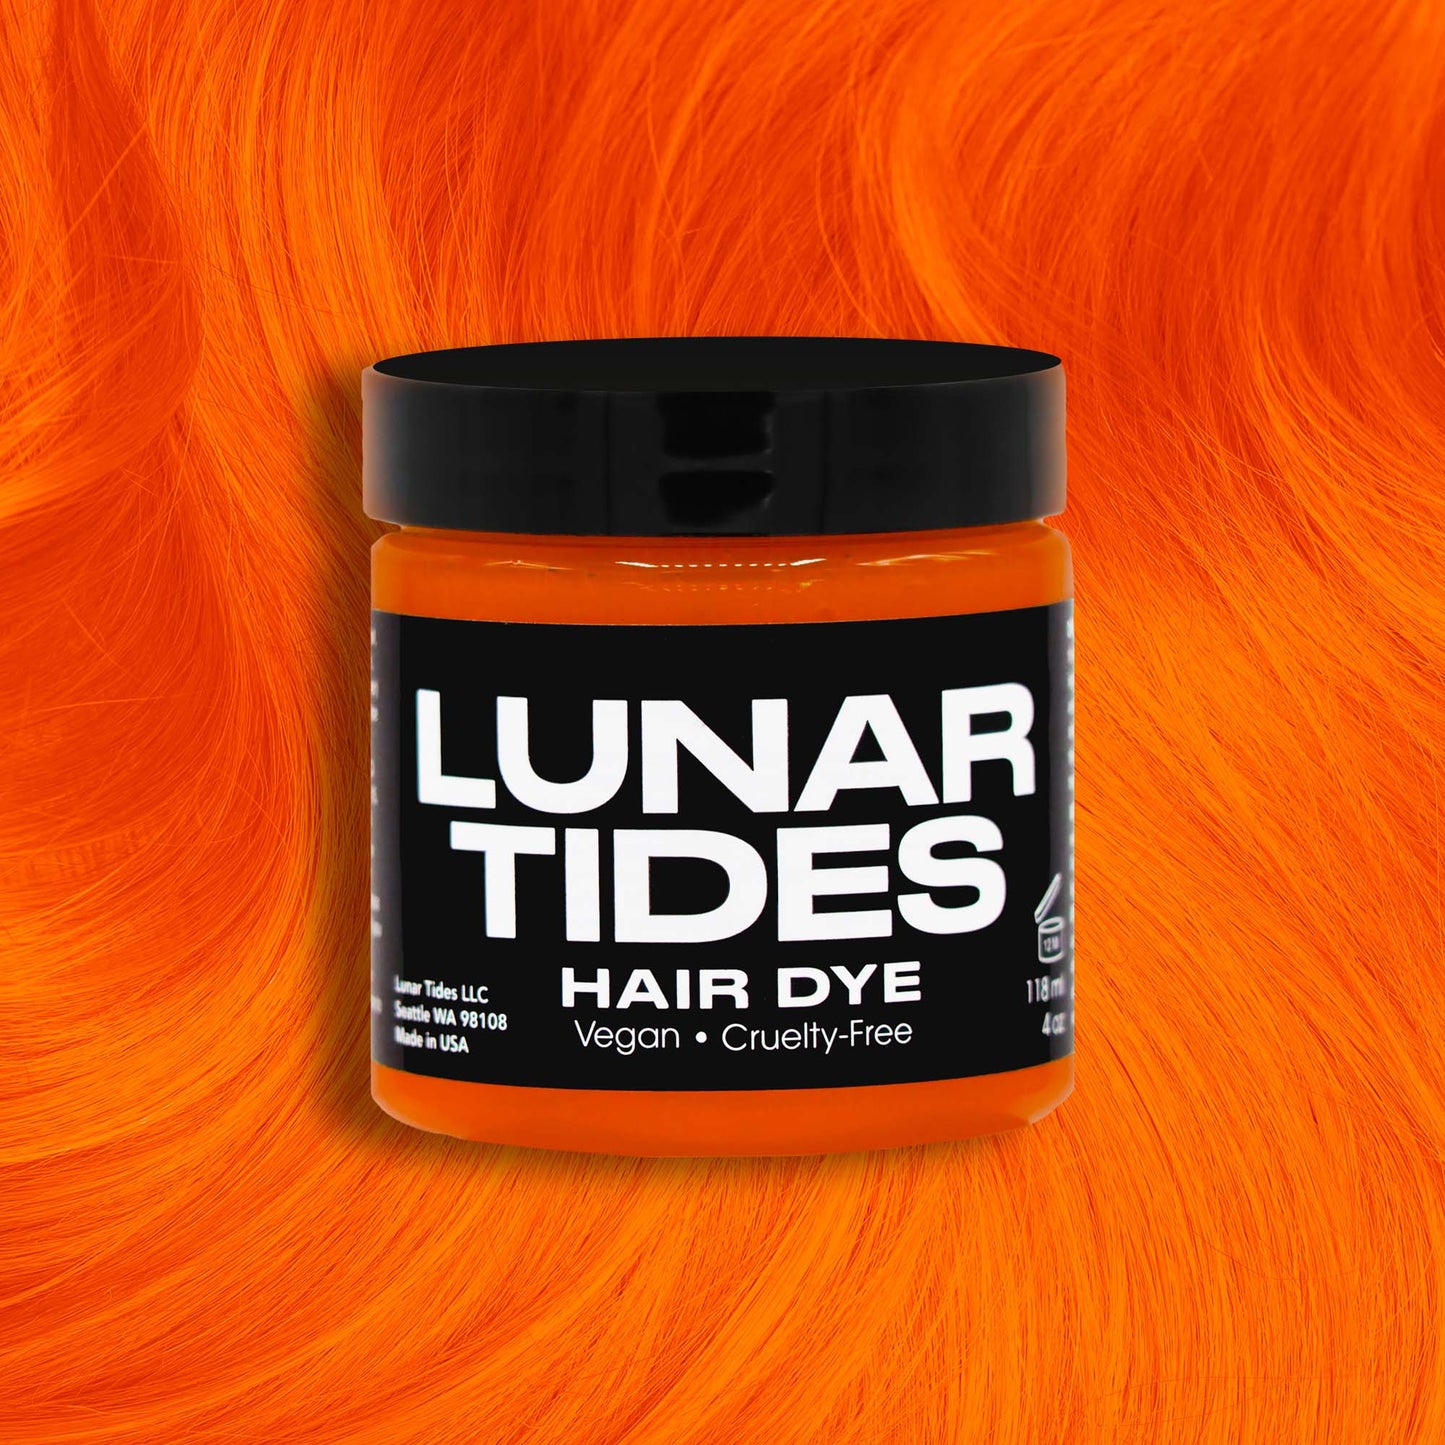 SOLAR FLARE Hair Dye Lunar Tides